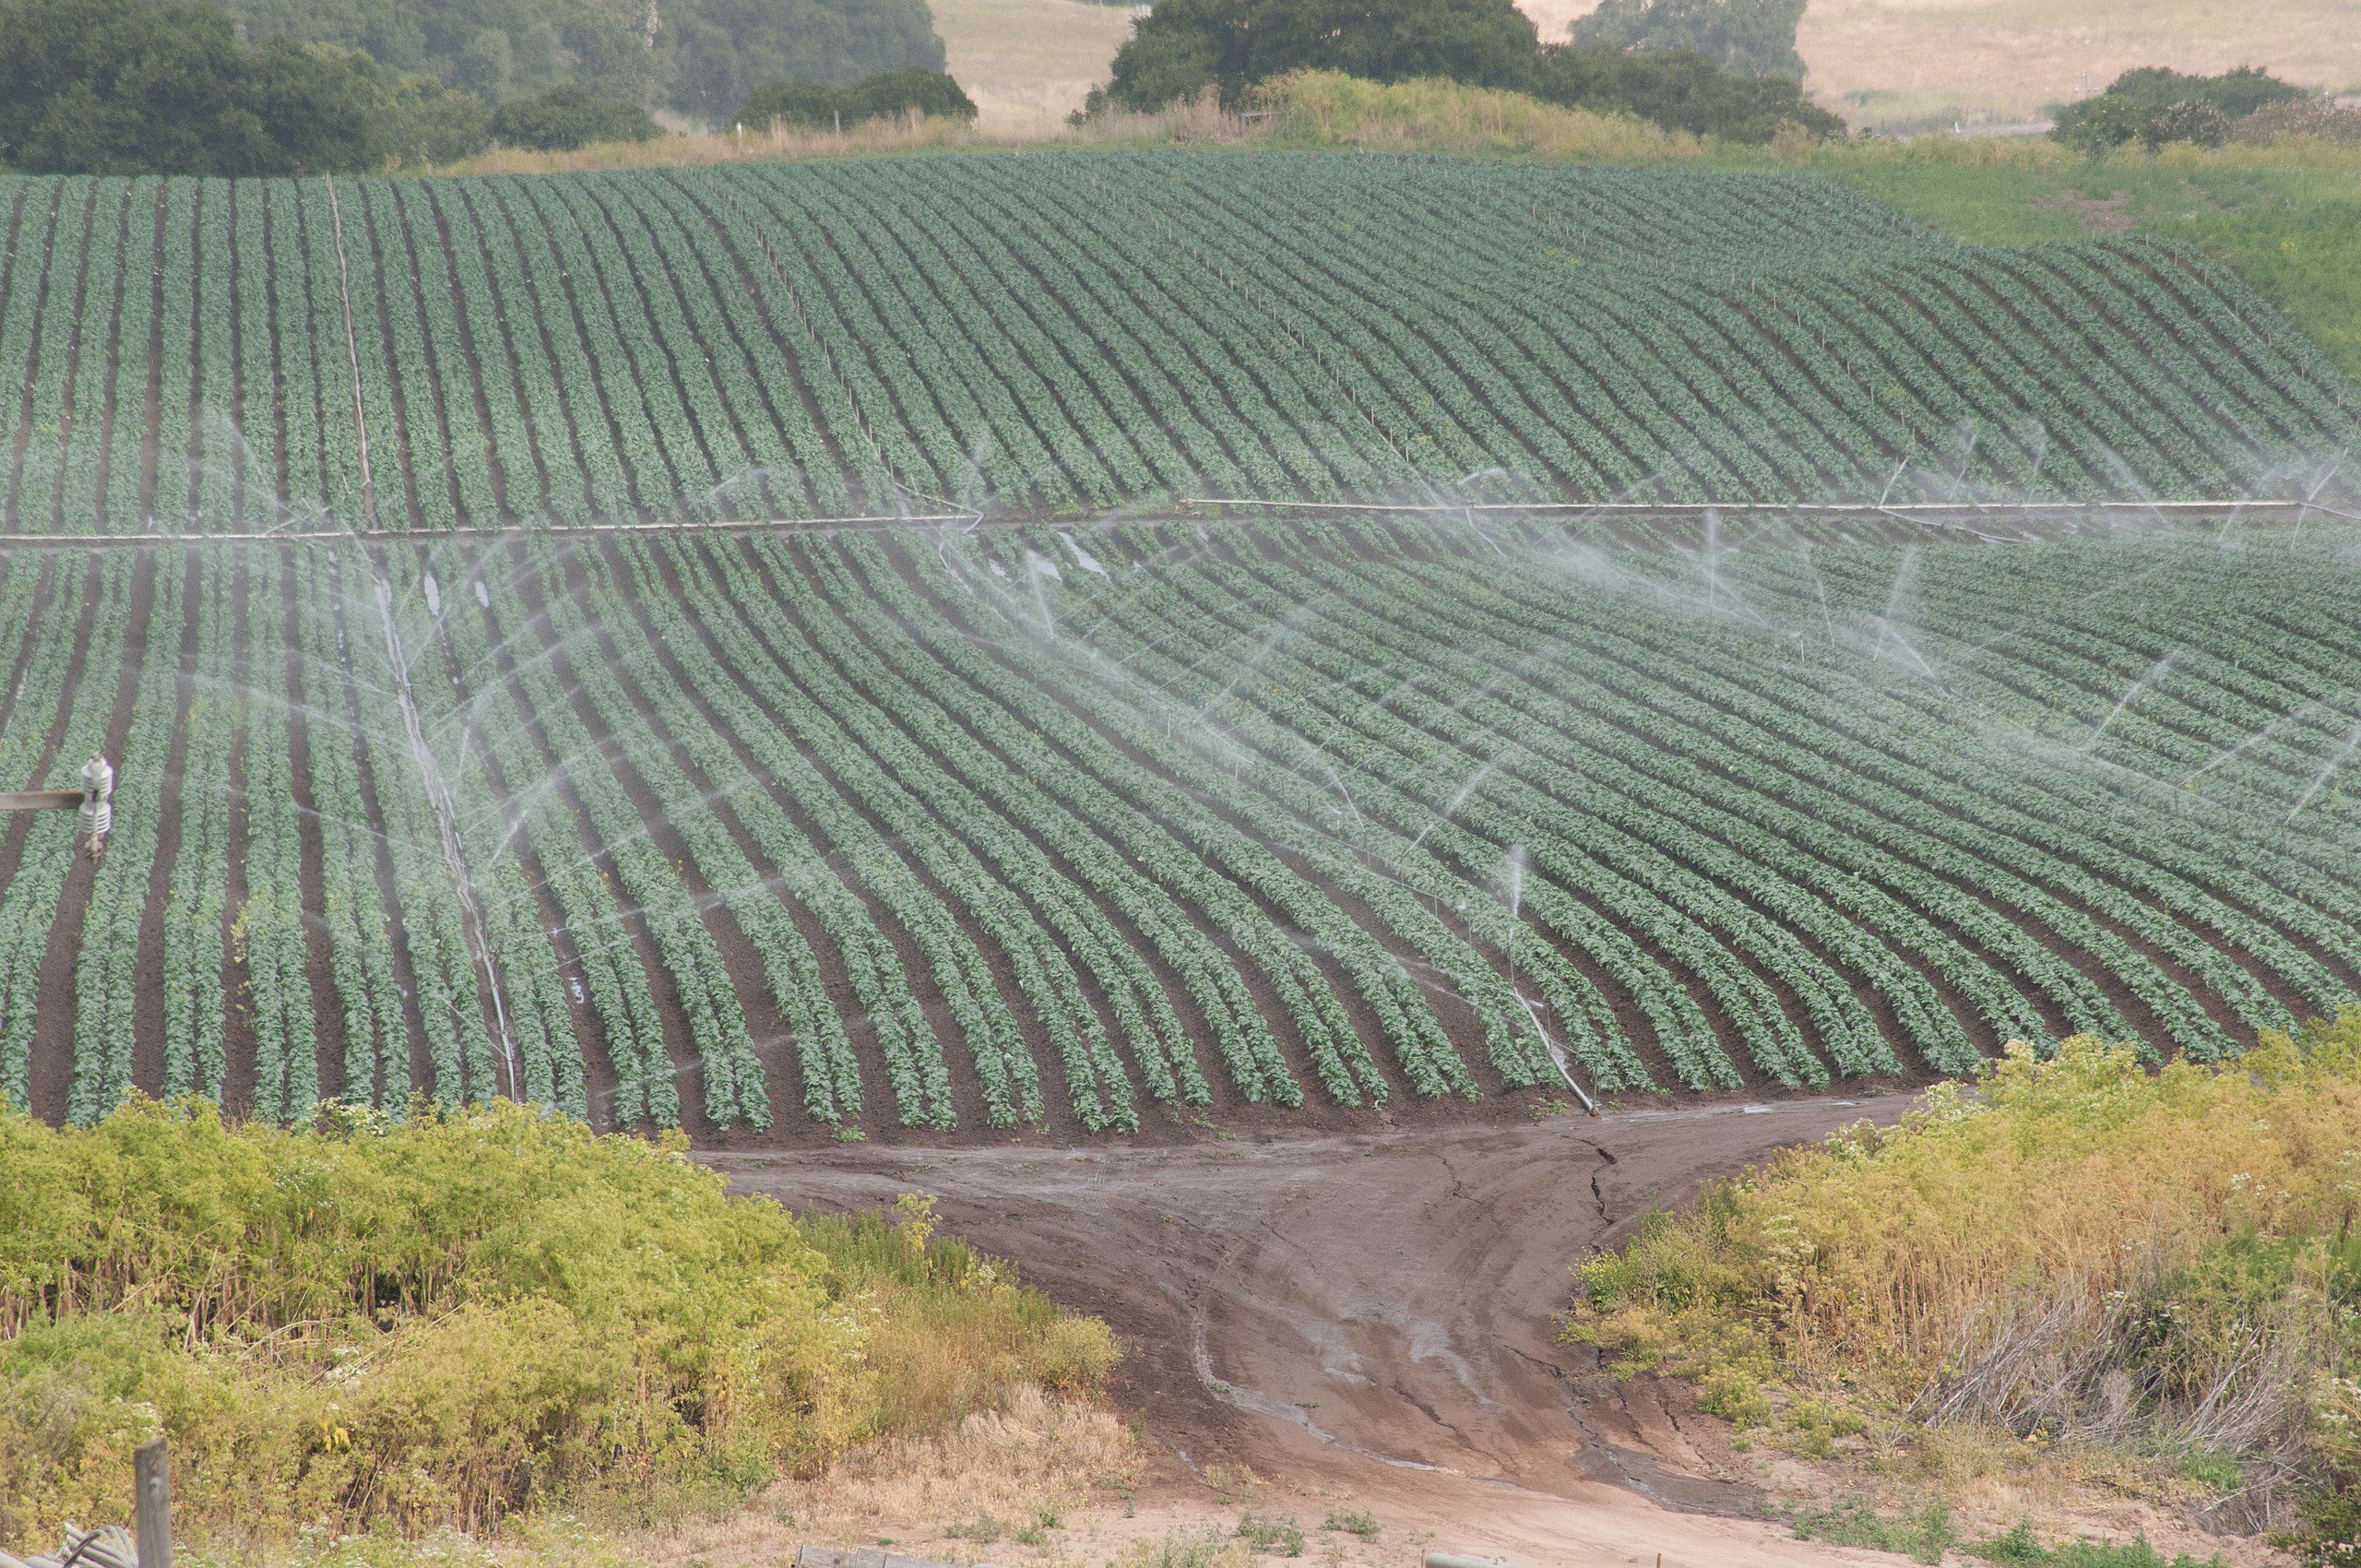 USDA photo or California irrigation of Leafy Crops